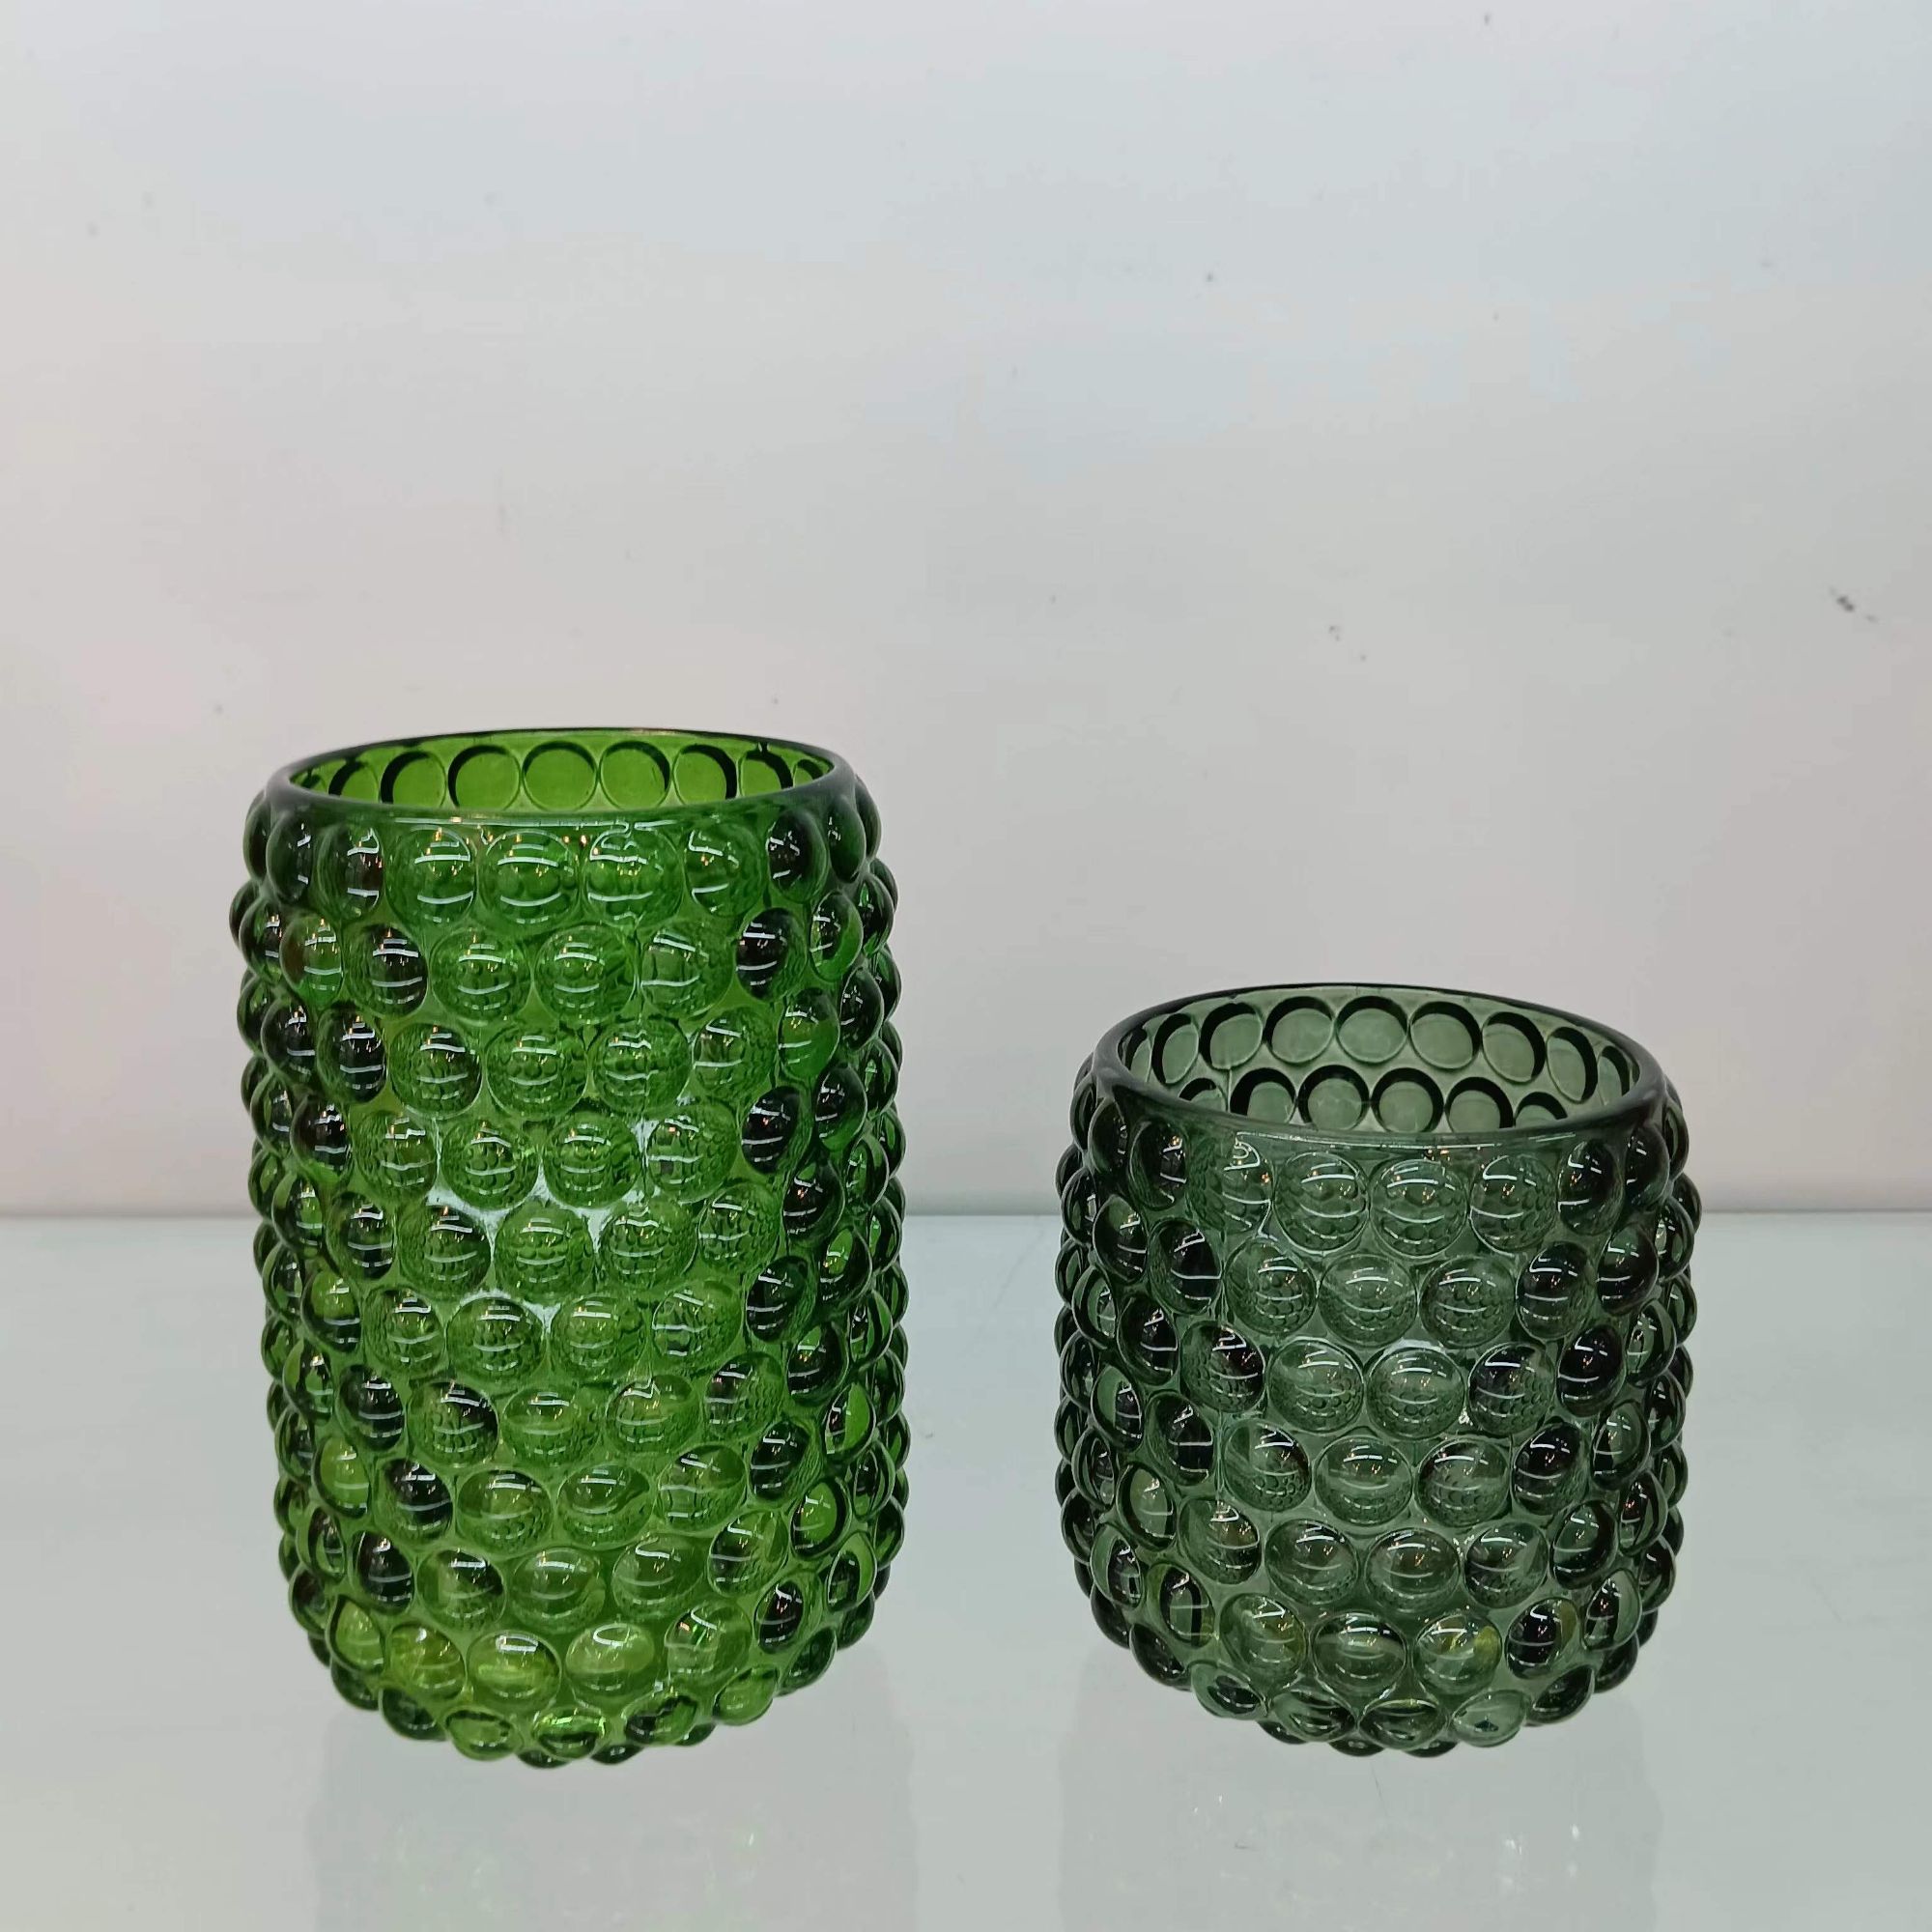 Color vase series